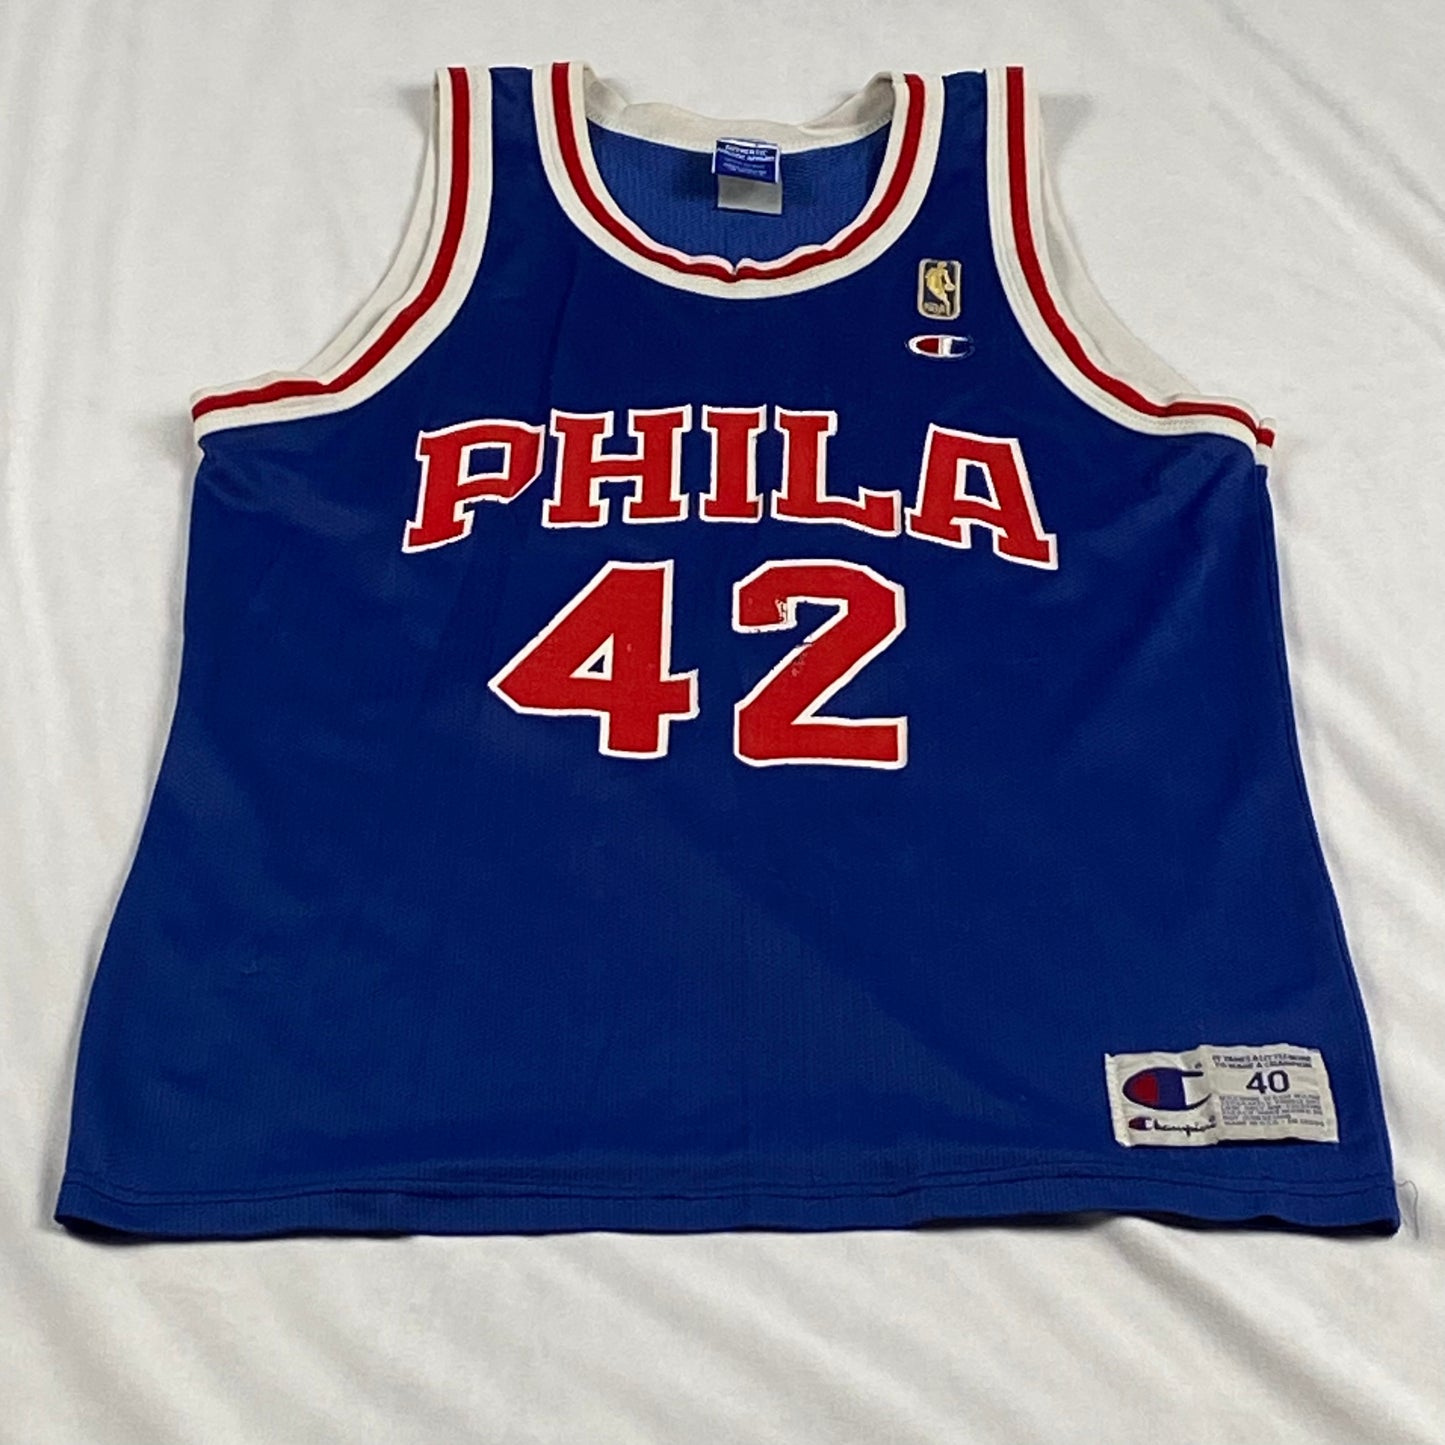 Philadelphia 76ers Jerry Stackhouse Champion Replica NBA at 50 Gold Logo NBA Basketball Jersey